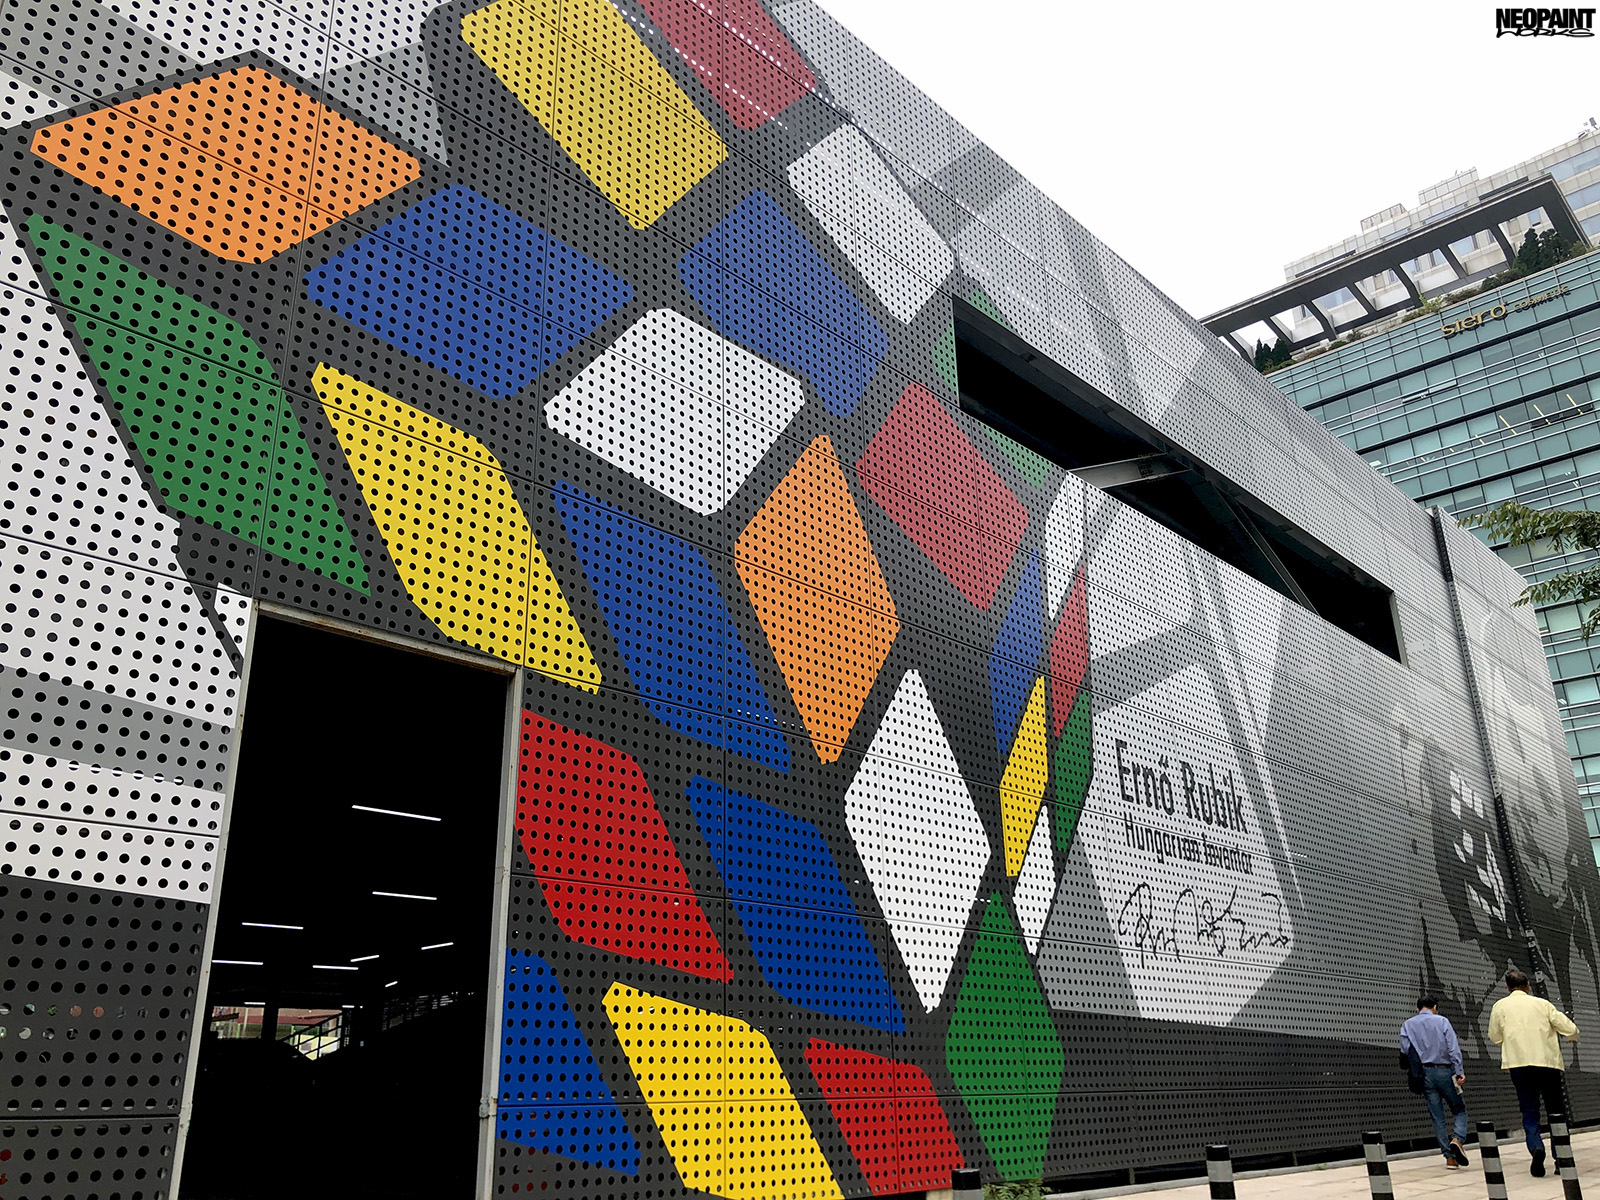 Rubik-kocka graffiti - Neopaint Works - Korea (86)